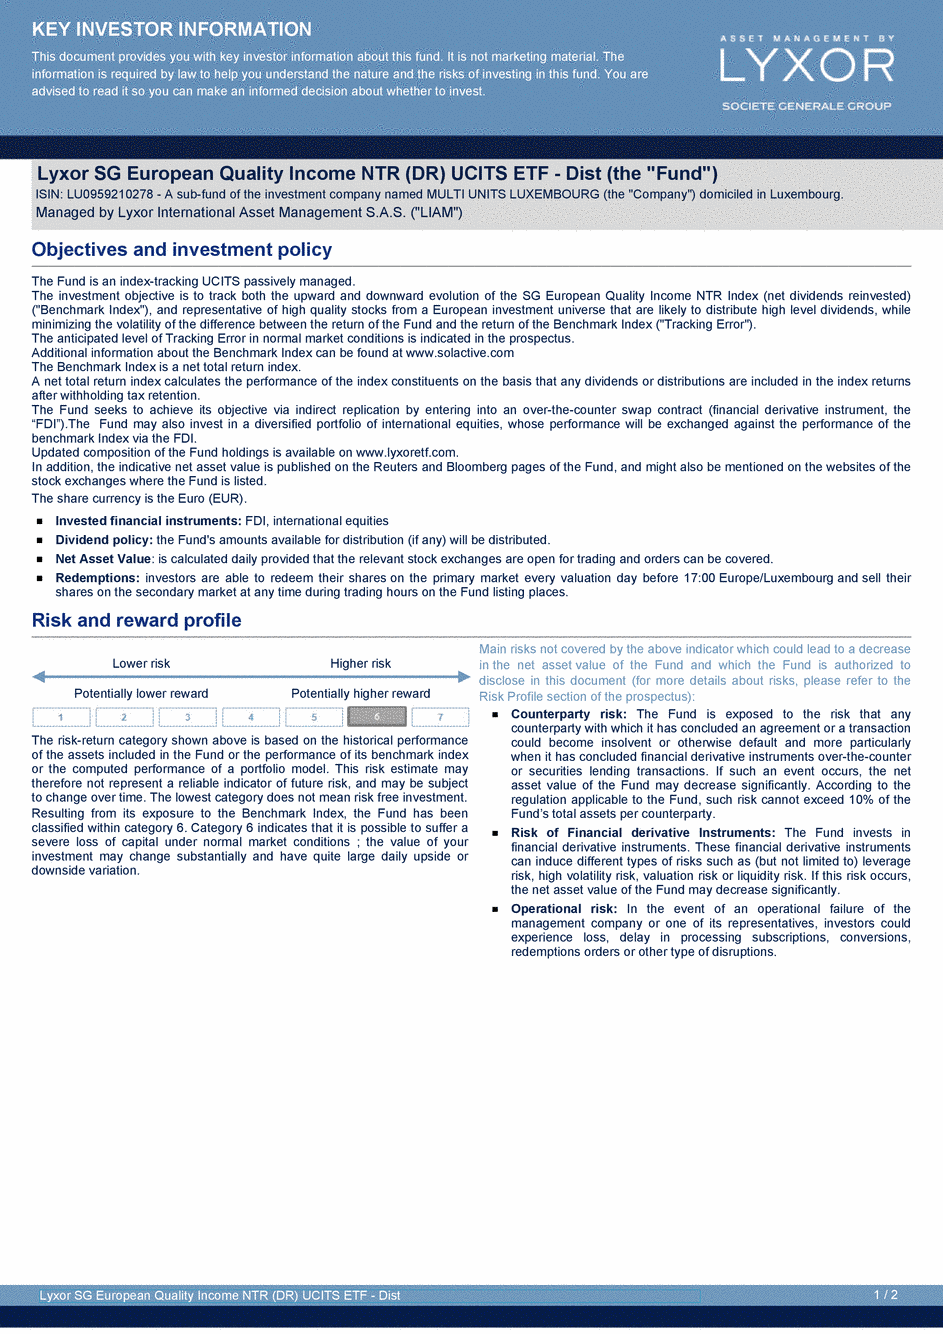 DICI Lyxor SG European Quality Income NTR (DR) UCITS ETF - Dist - 19/02/2021 - Anglais